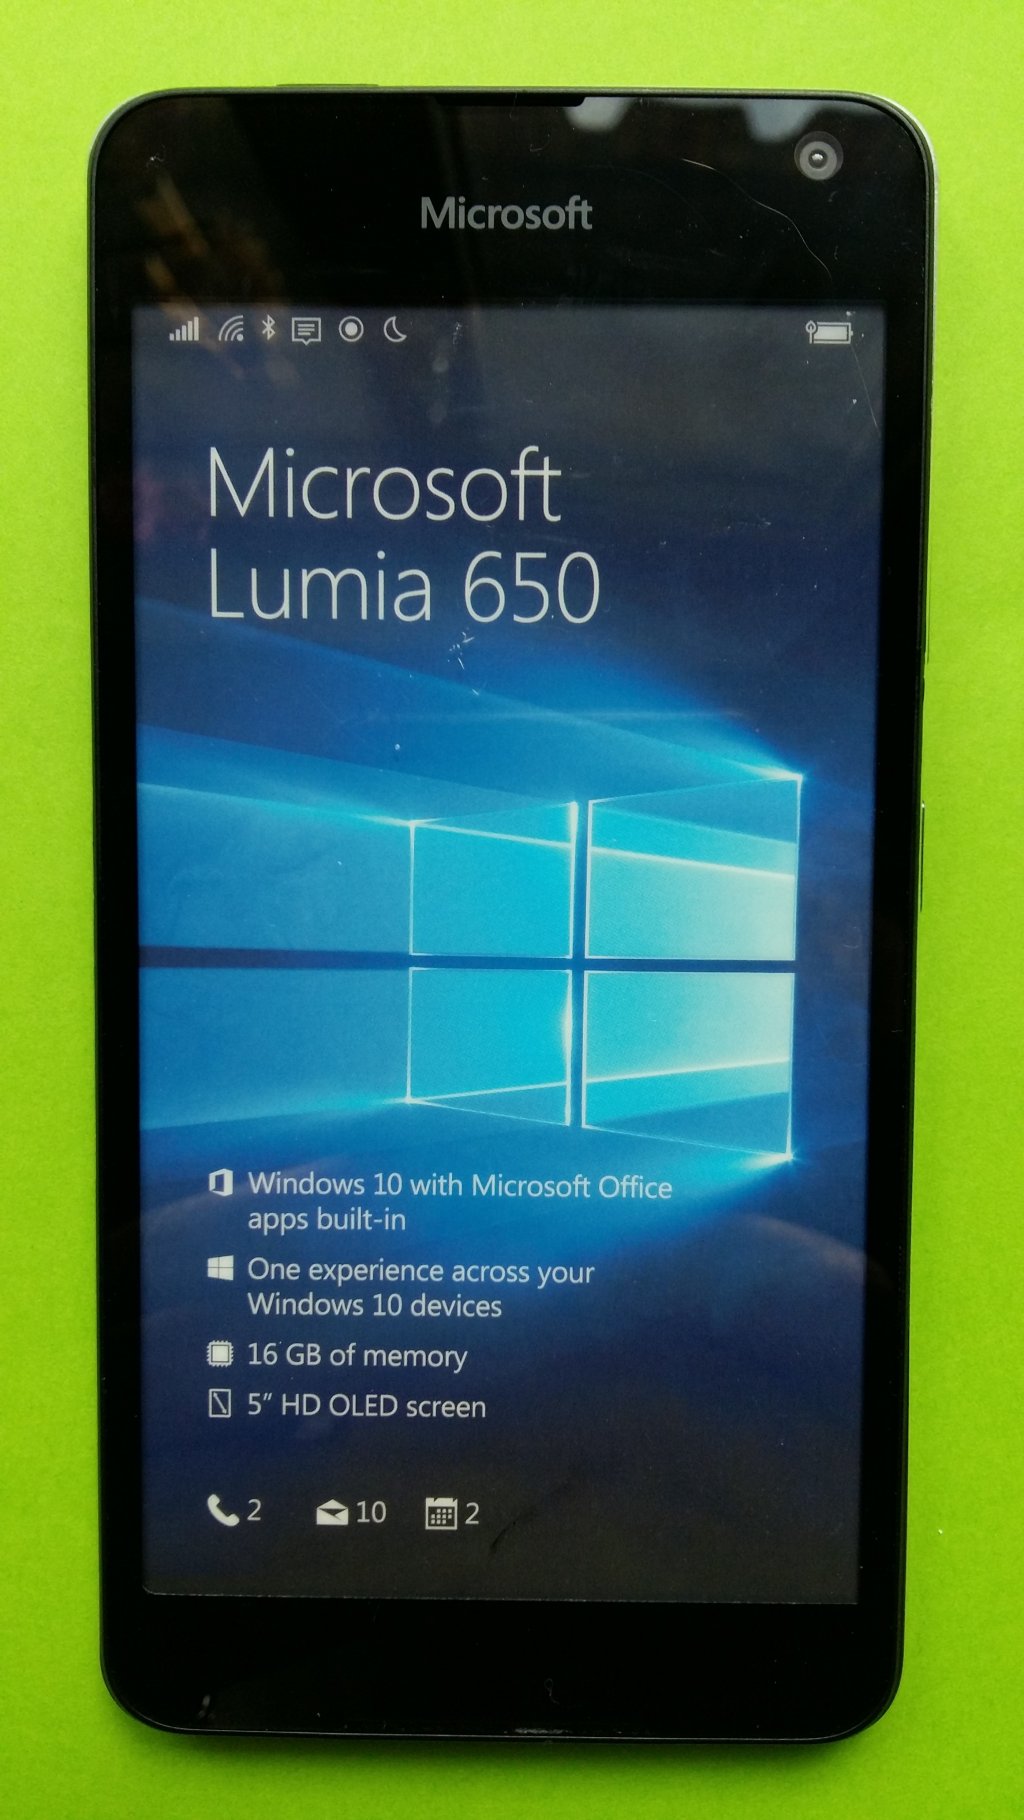 image-12107531-Microsoft_650_Lumia_Atrappe-c9f0f.w640.jpg